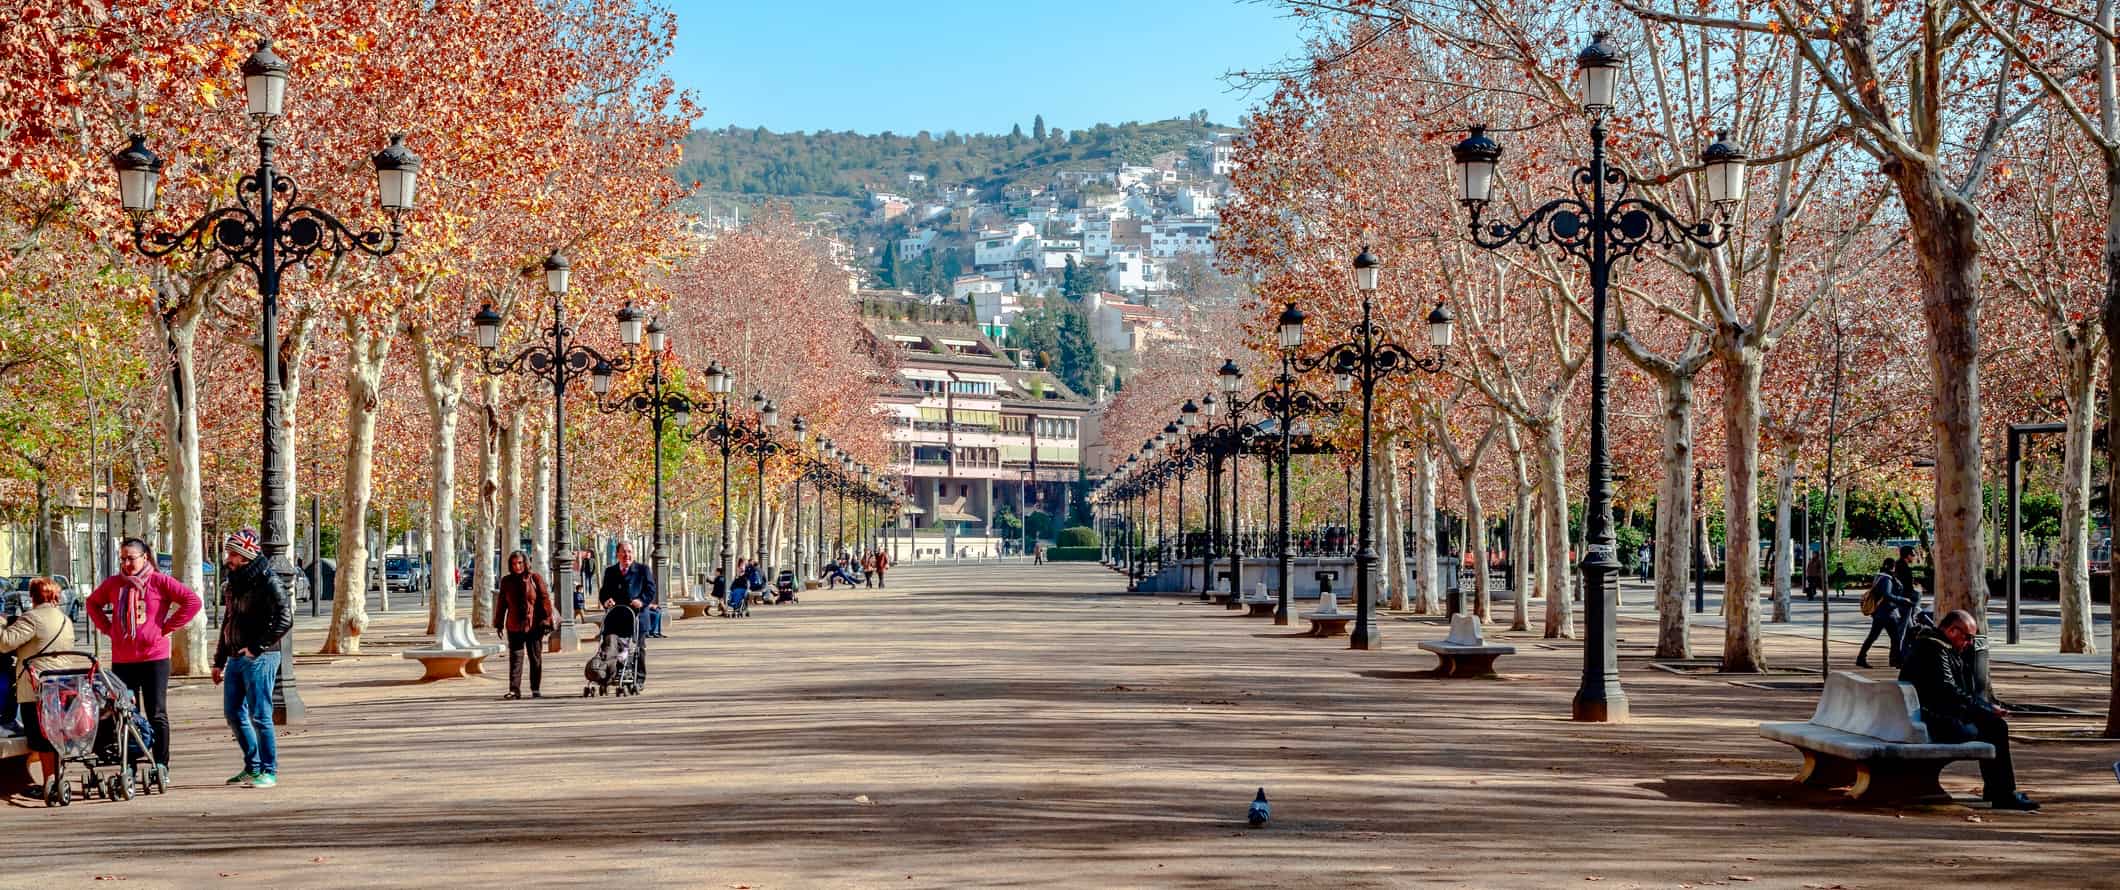 People walking and biking along a wide path on a warm day in Granada, Spain